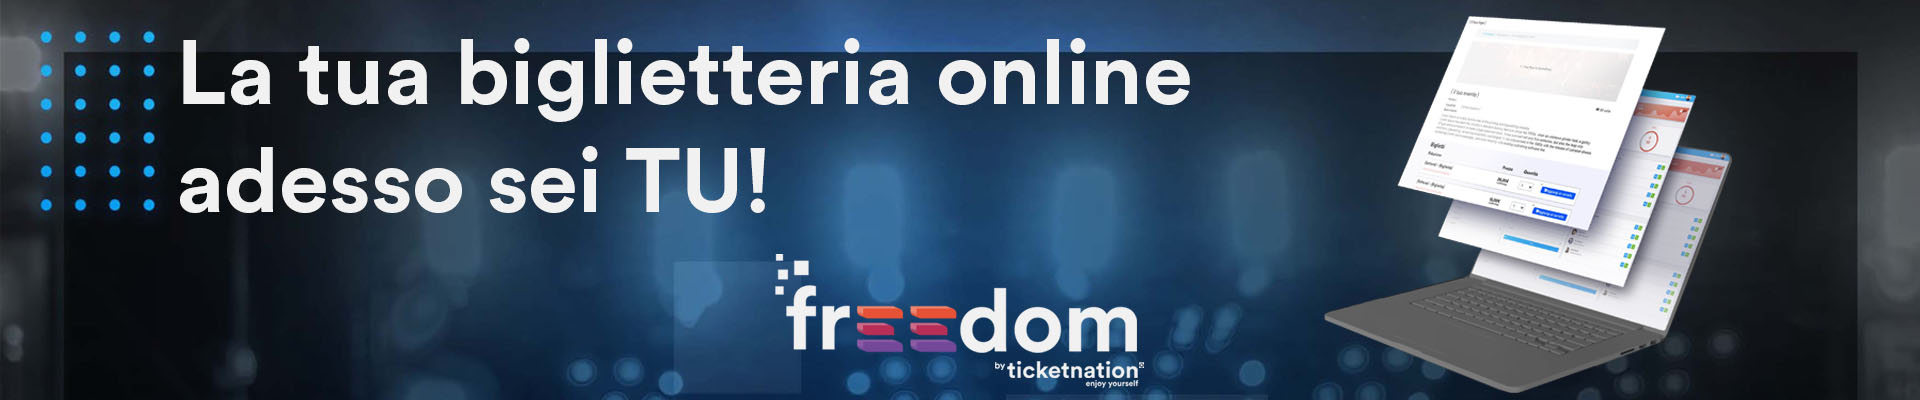 banner-freedom-biglietteria